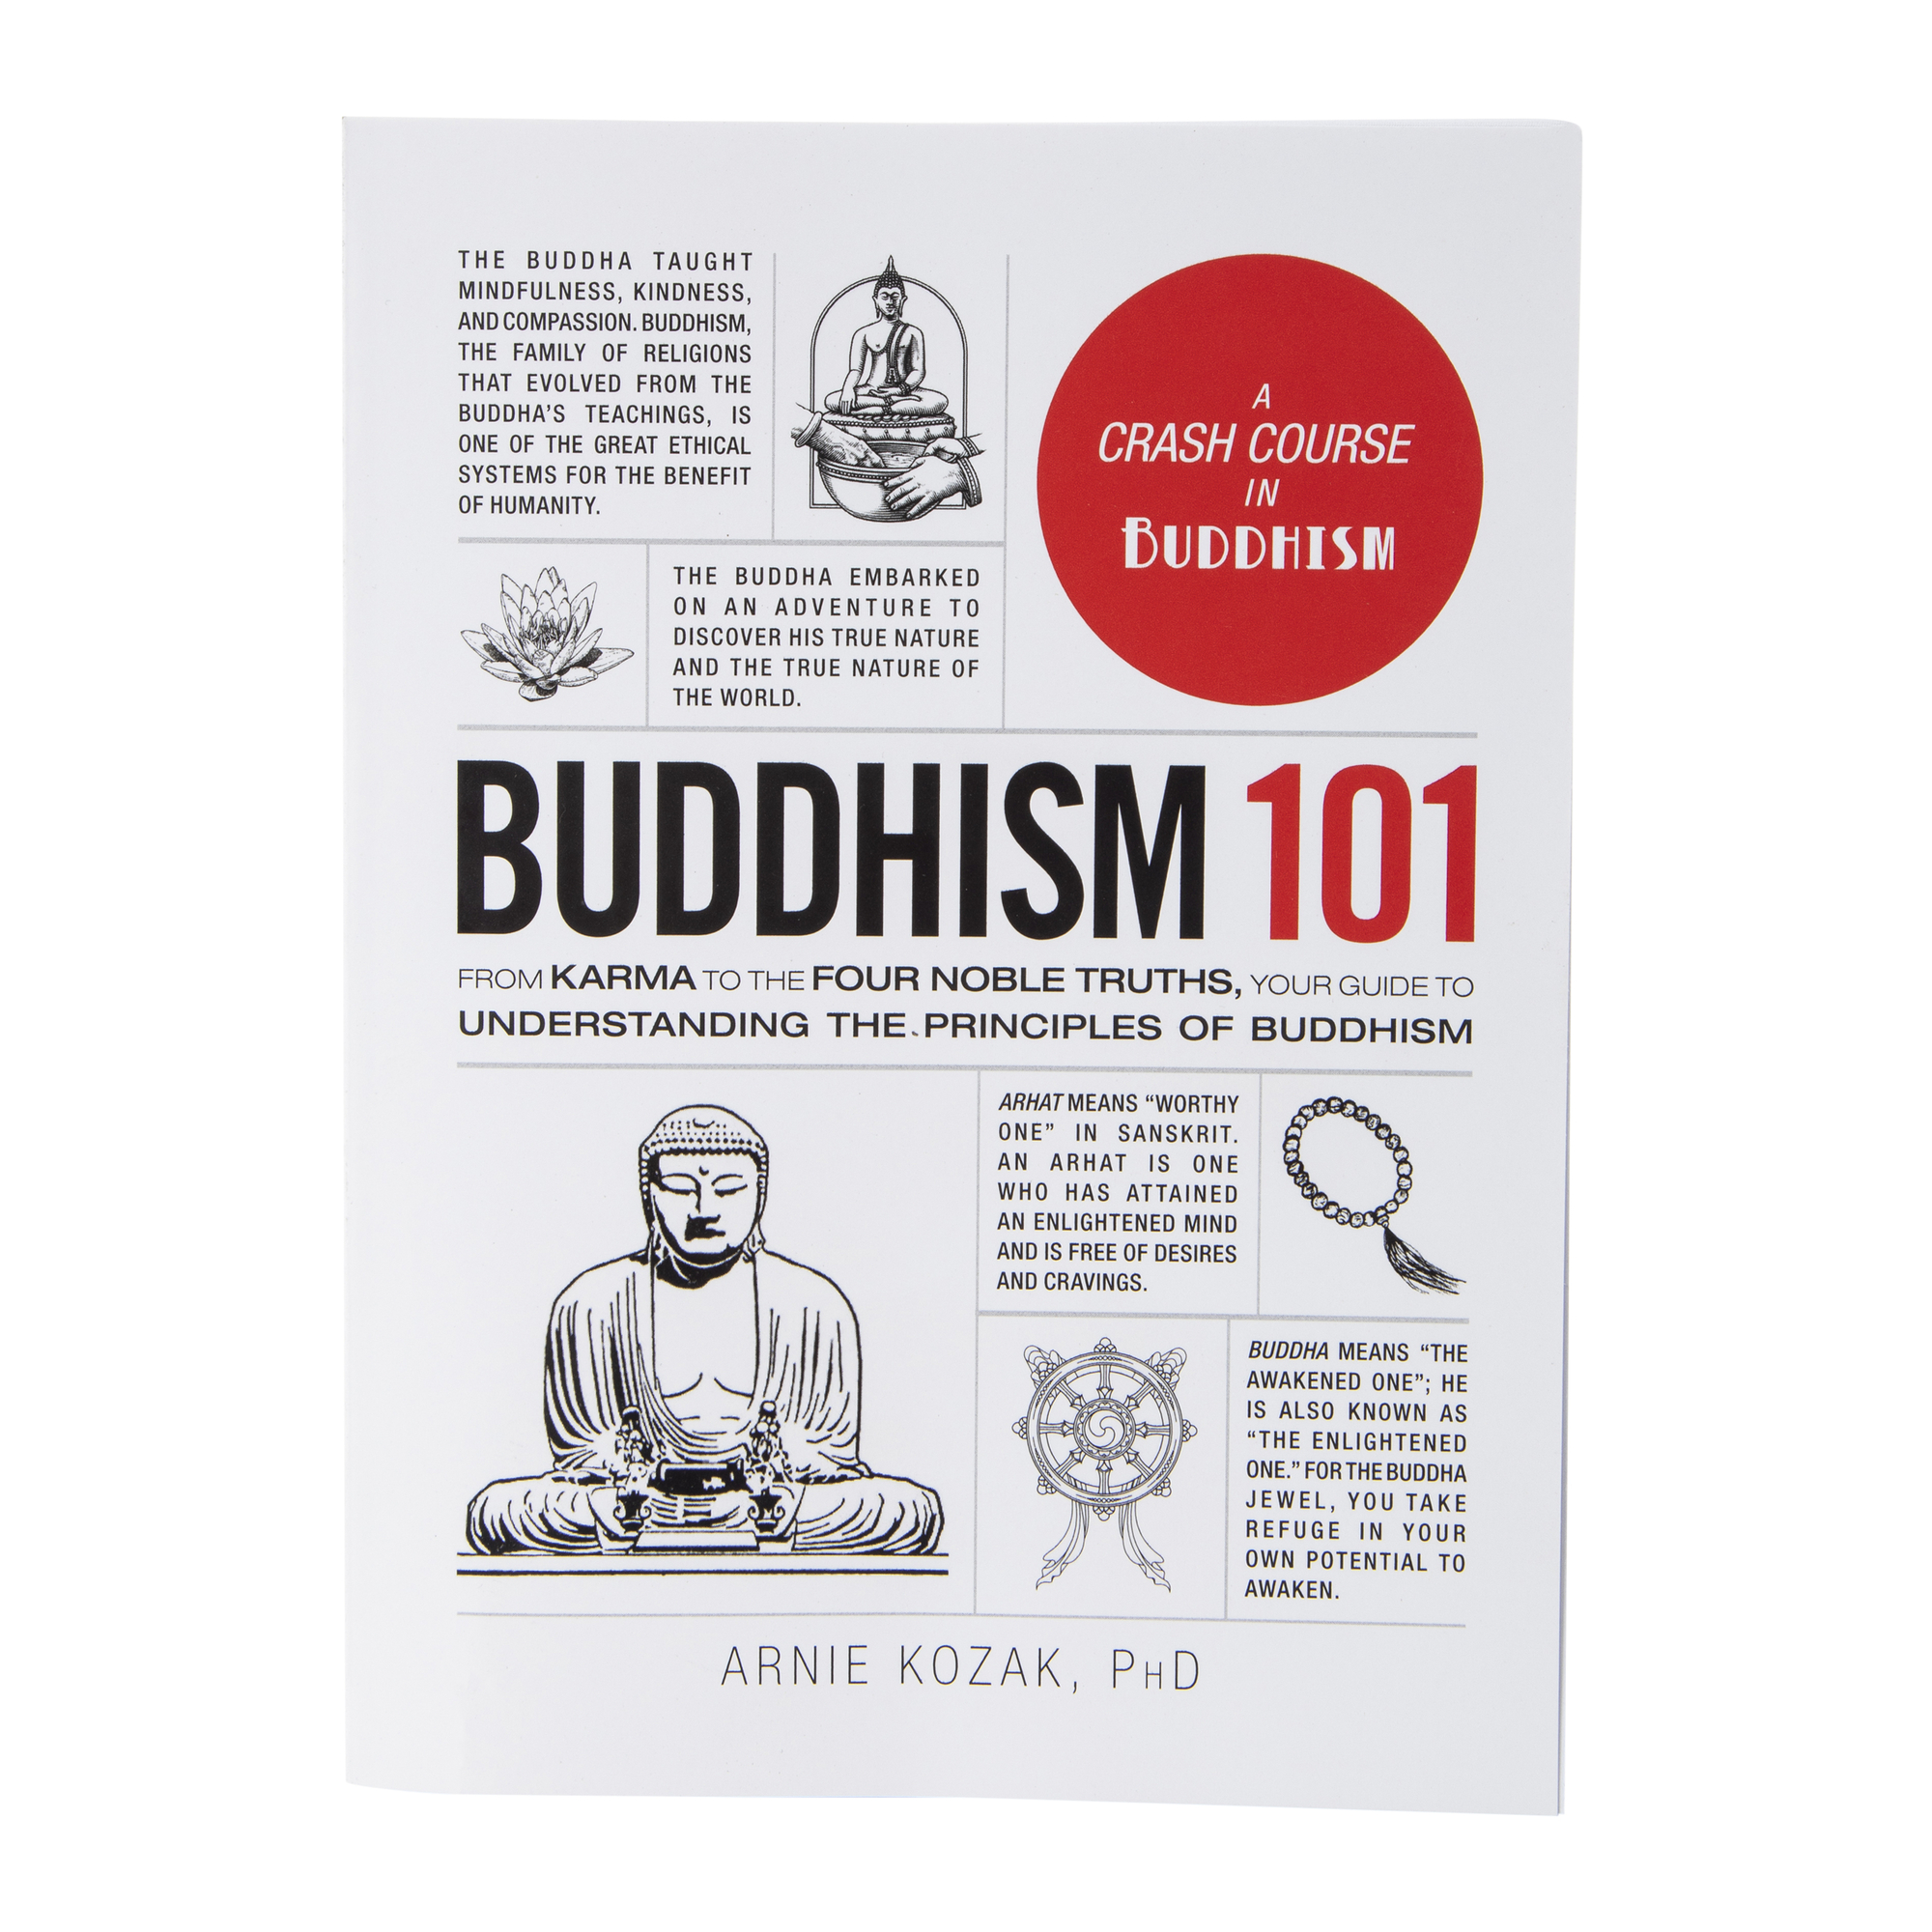 buddhism 101 by arnie kozak, PhD